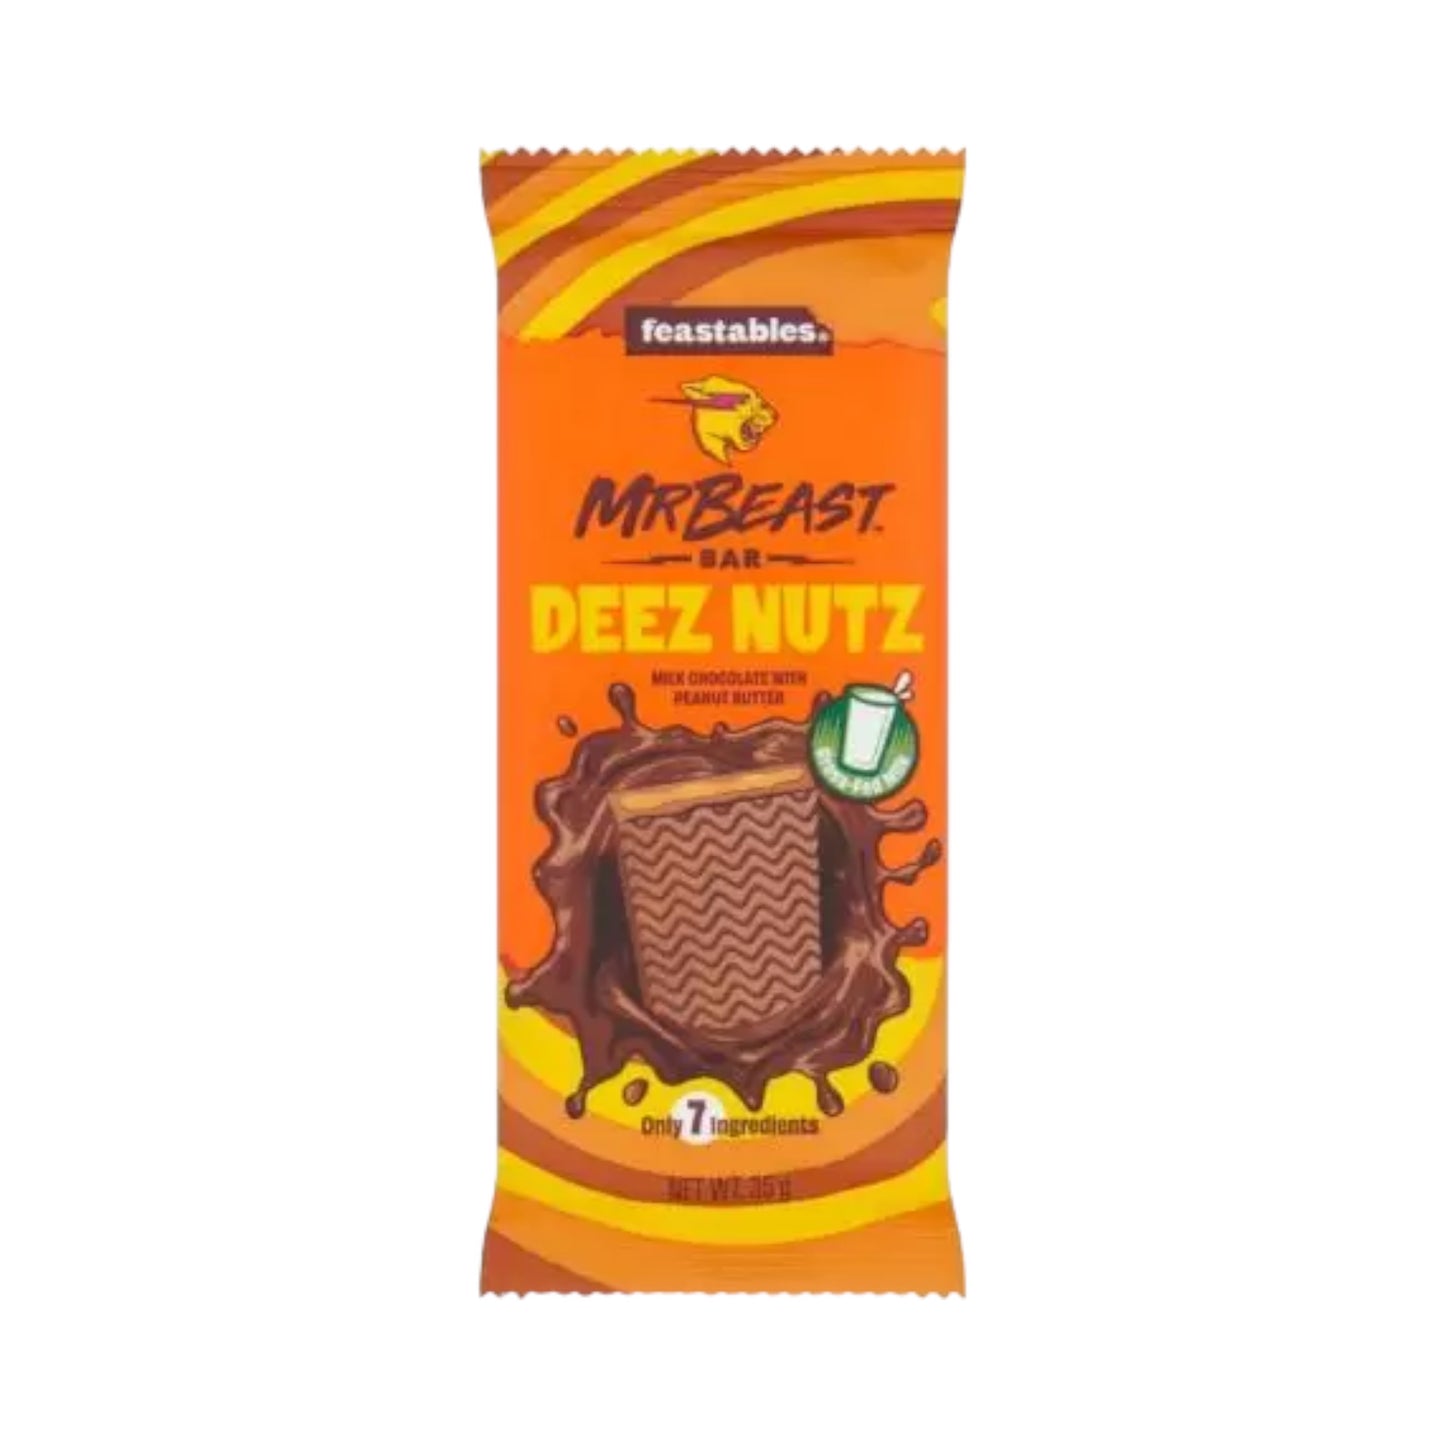 Feastables MrBeast Bar Deez Nuts Milk Chocolate with Peanut Butter - 35g (UK)